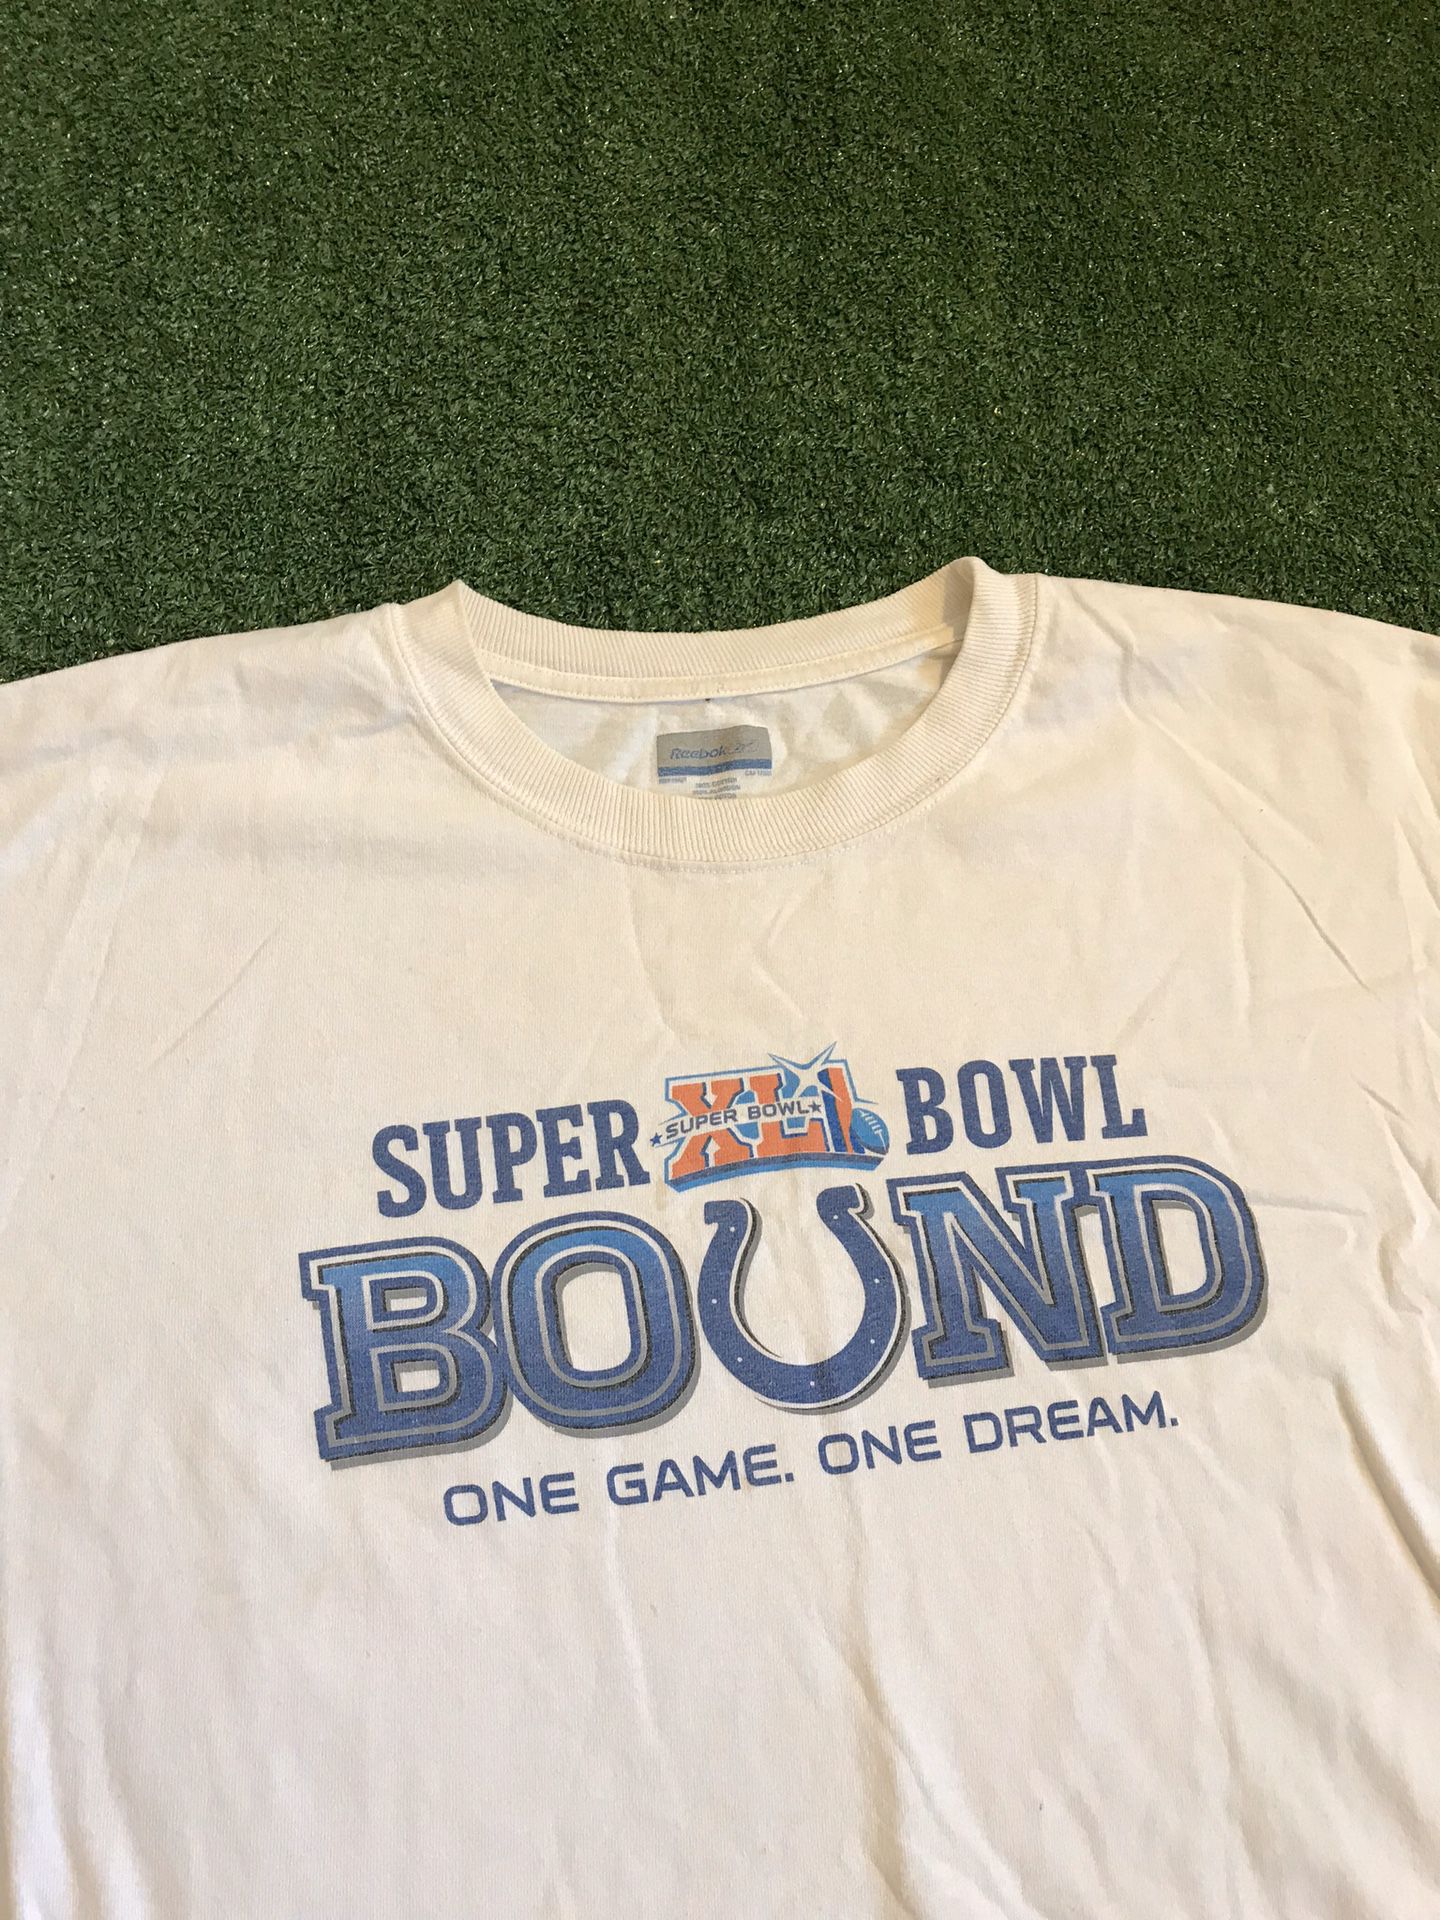 Indianapolis Colts NFL Super Bowl Bound XLI Reebok Men’s T Shirt. Sz XXL